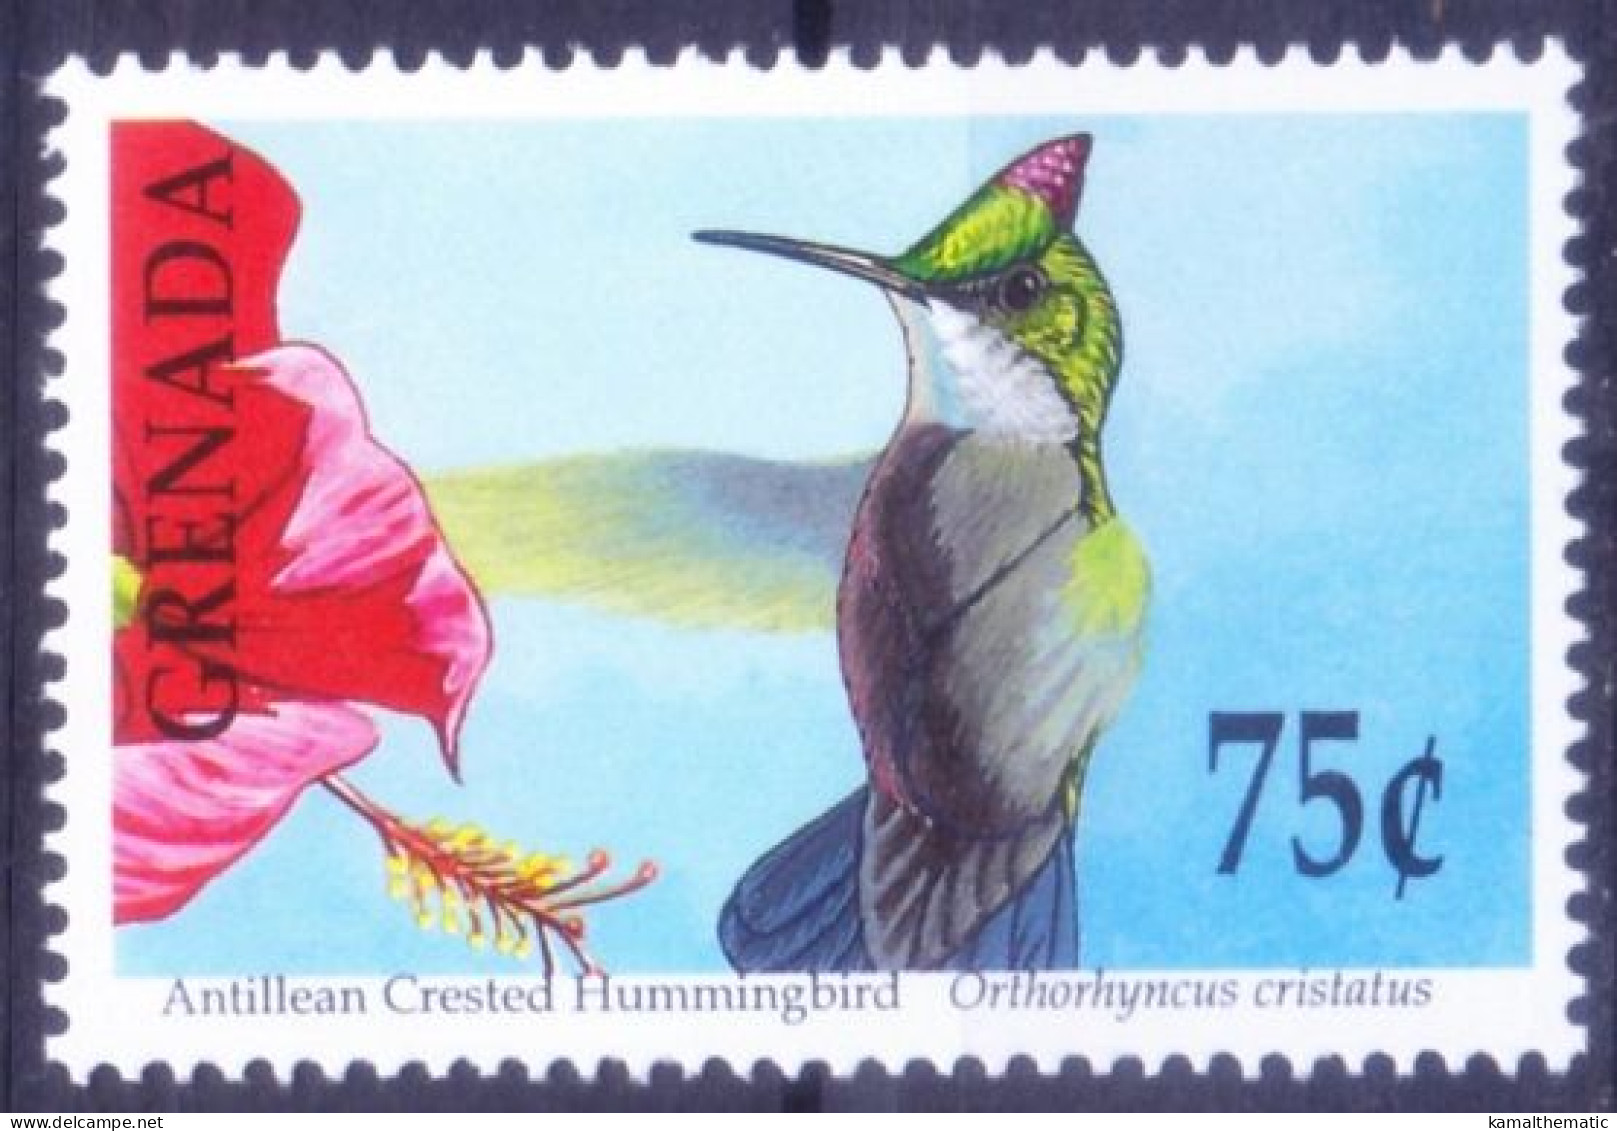 Grenada 1990 MNH, Antillean Crested Hummingbird, Birds - Colibris